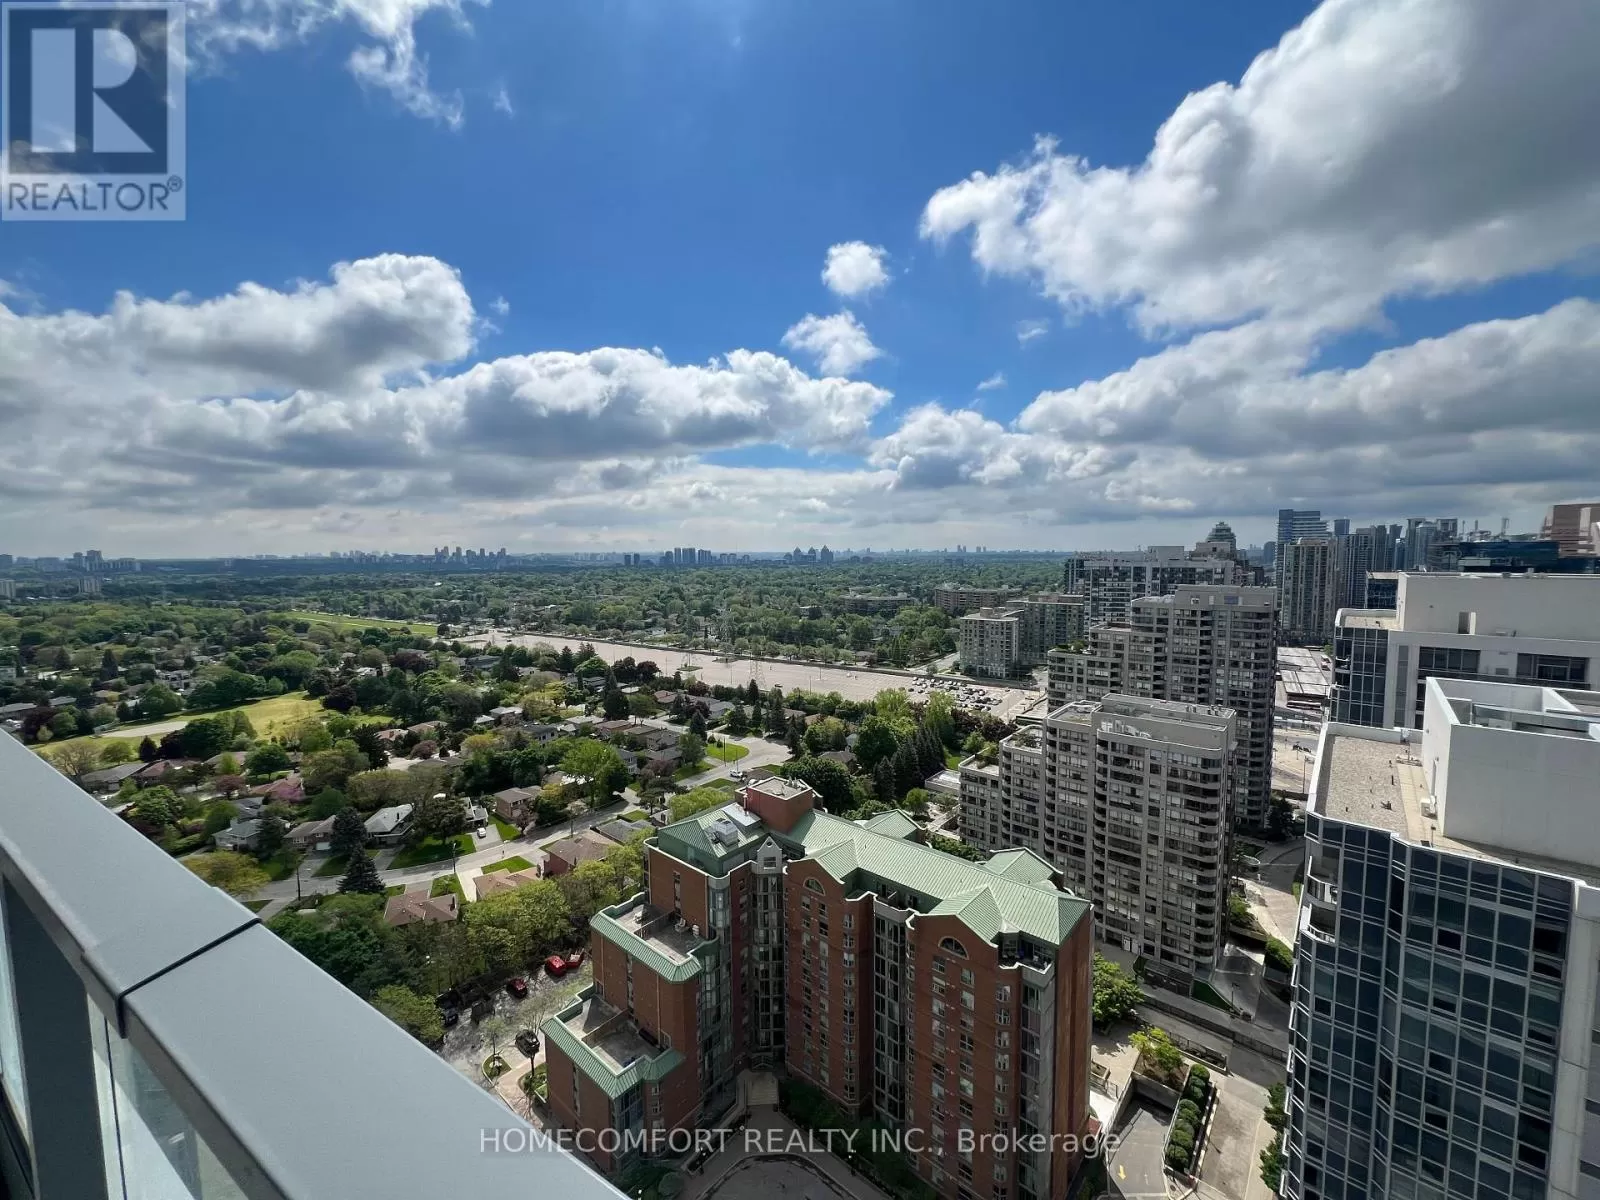 Apartment for rent: S2604 - 8 Olympic Garden Drive, Toronto, Ontario M2M 0B9